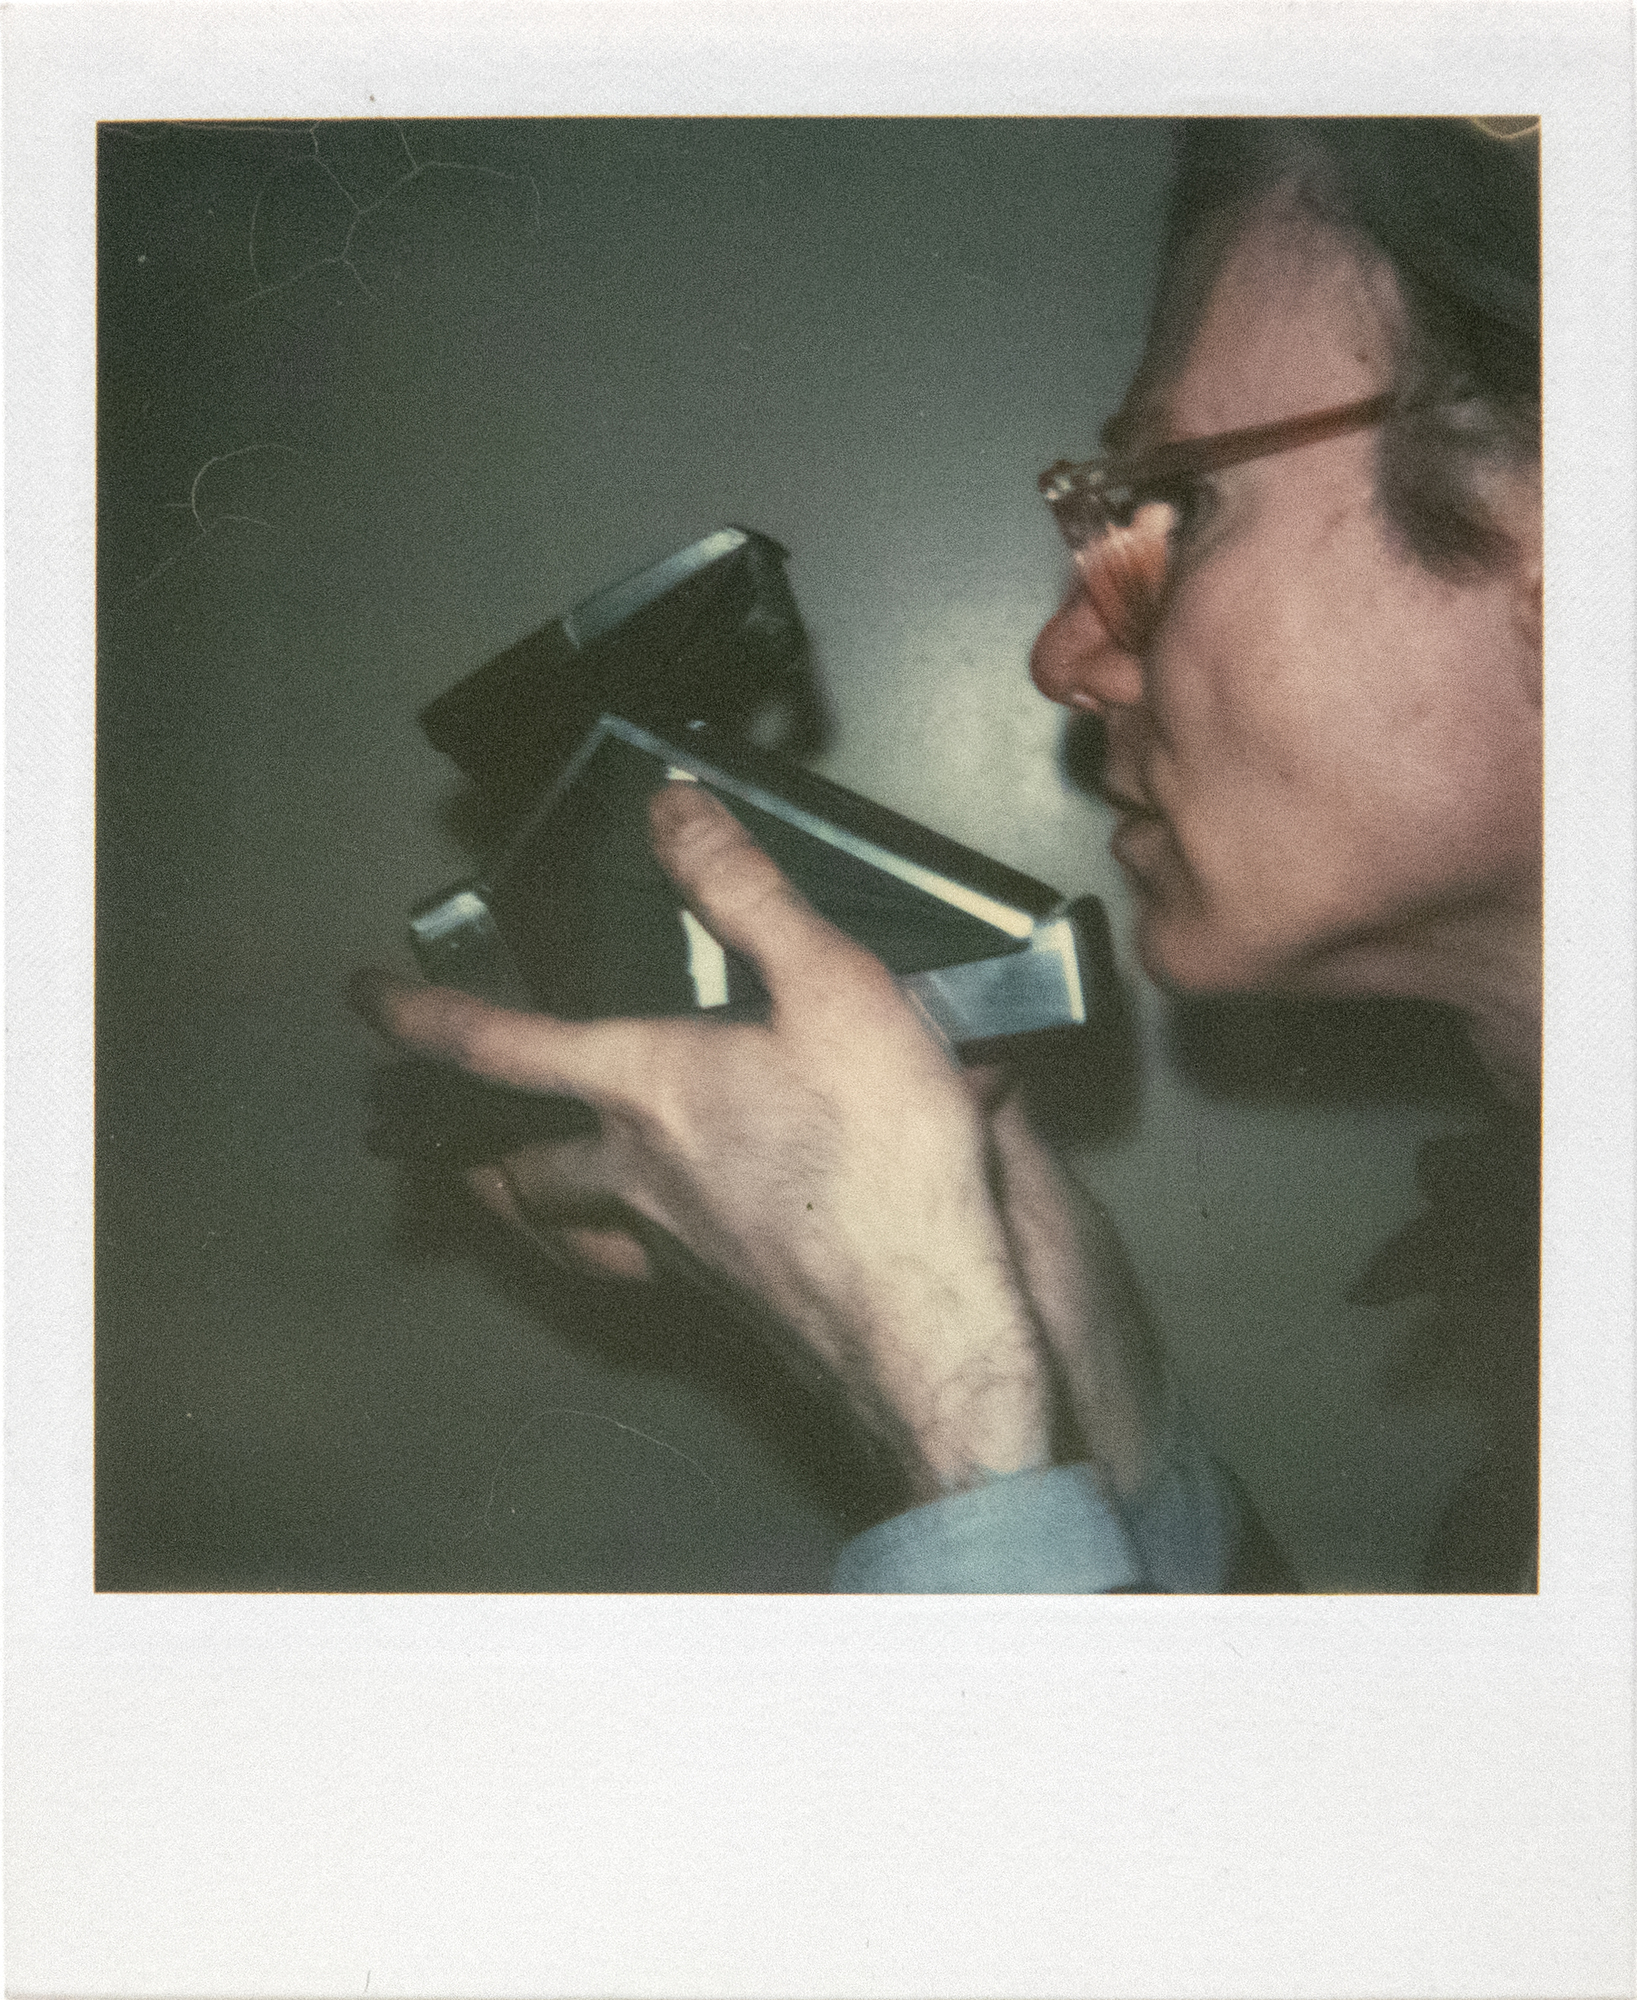 ANDY WARHOL - Selbstporträt mit Kamera (Diptychon) - Polaroid, Polacolor - 4 1/4 x 3 3/8 in. ea.